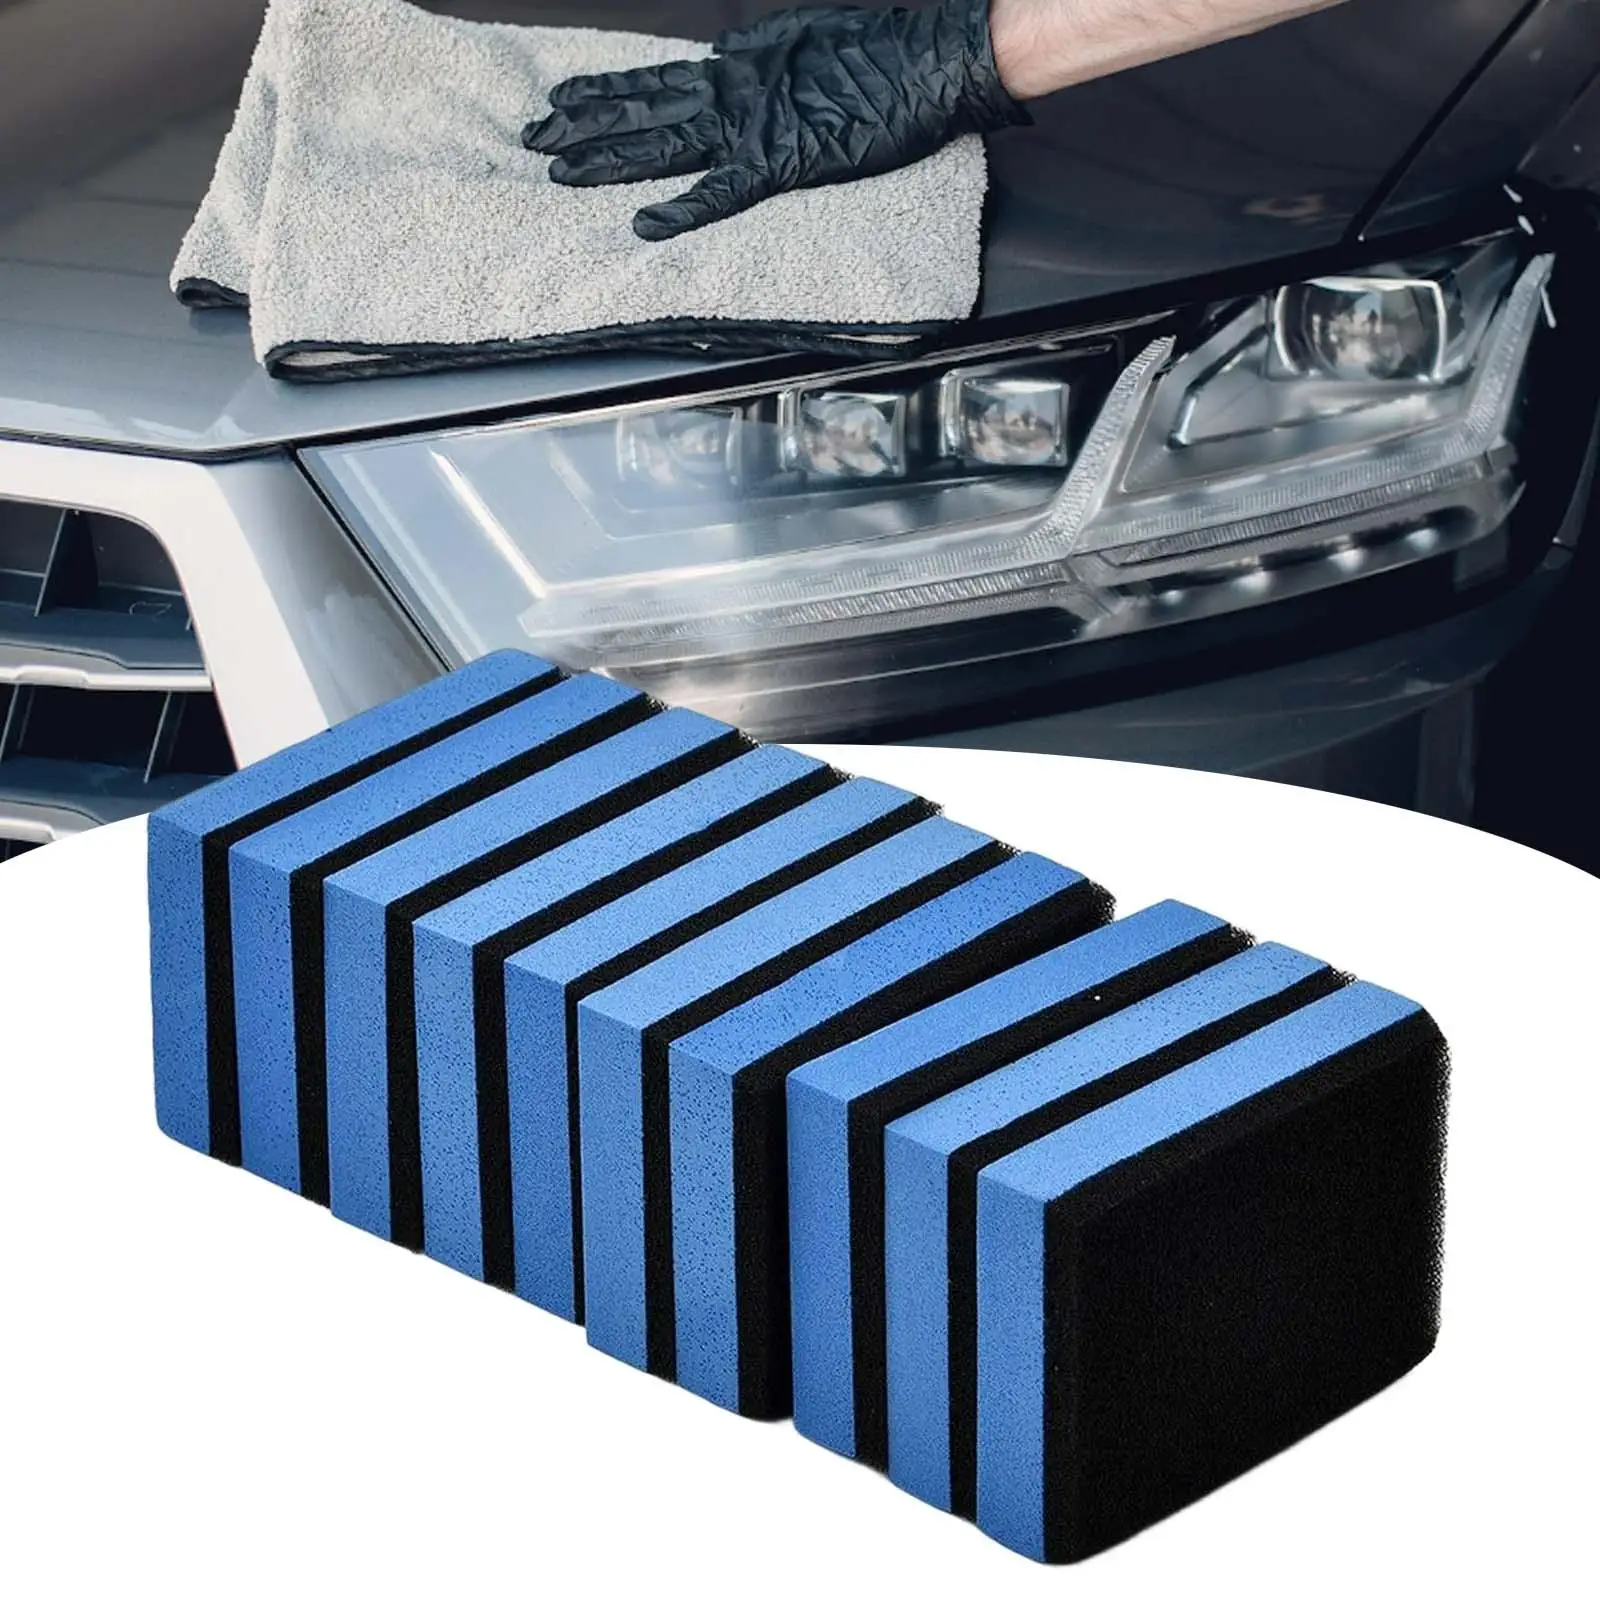 10x Car Waxing Polishing Pads, Coating Sponge Auto Cleaning